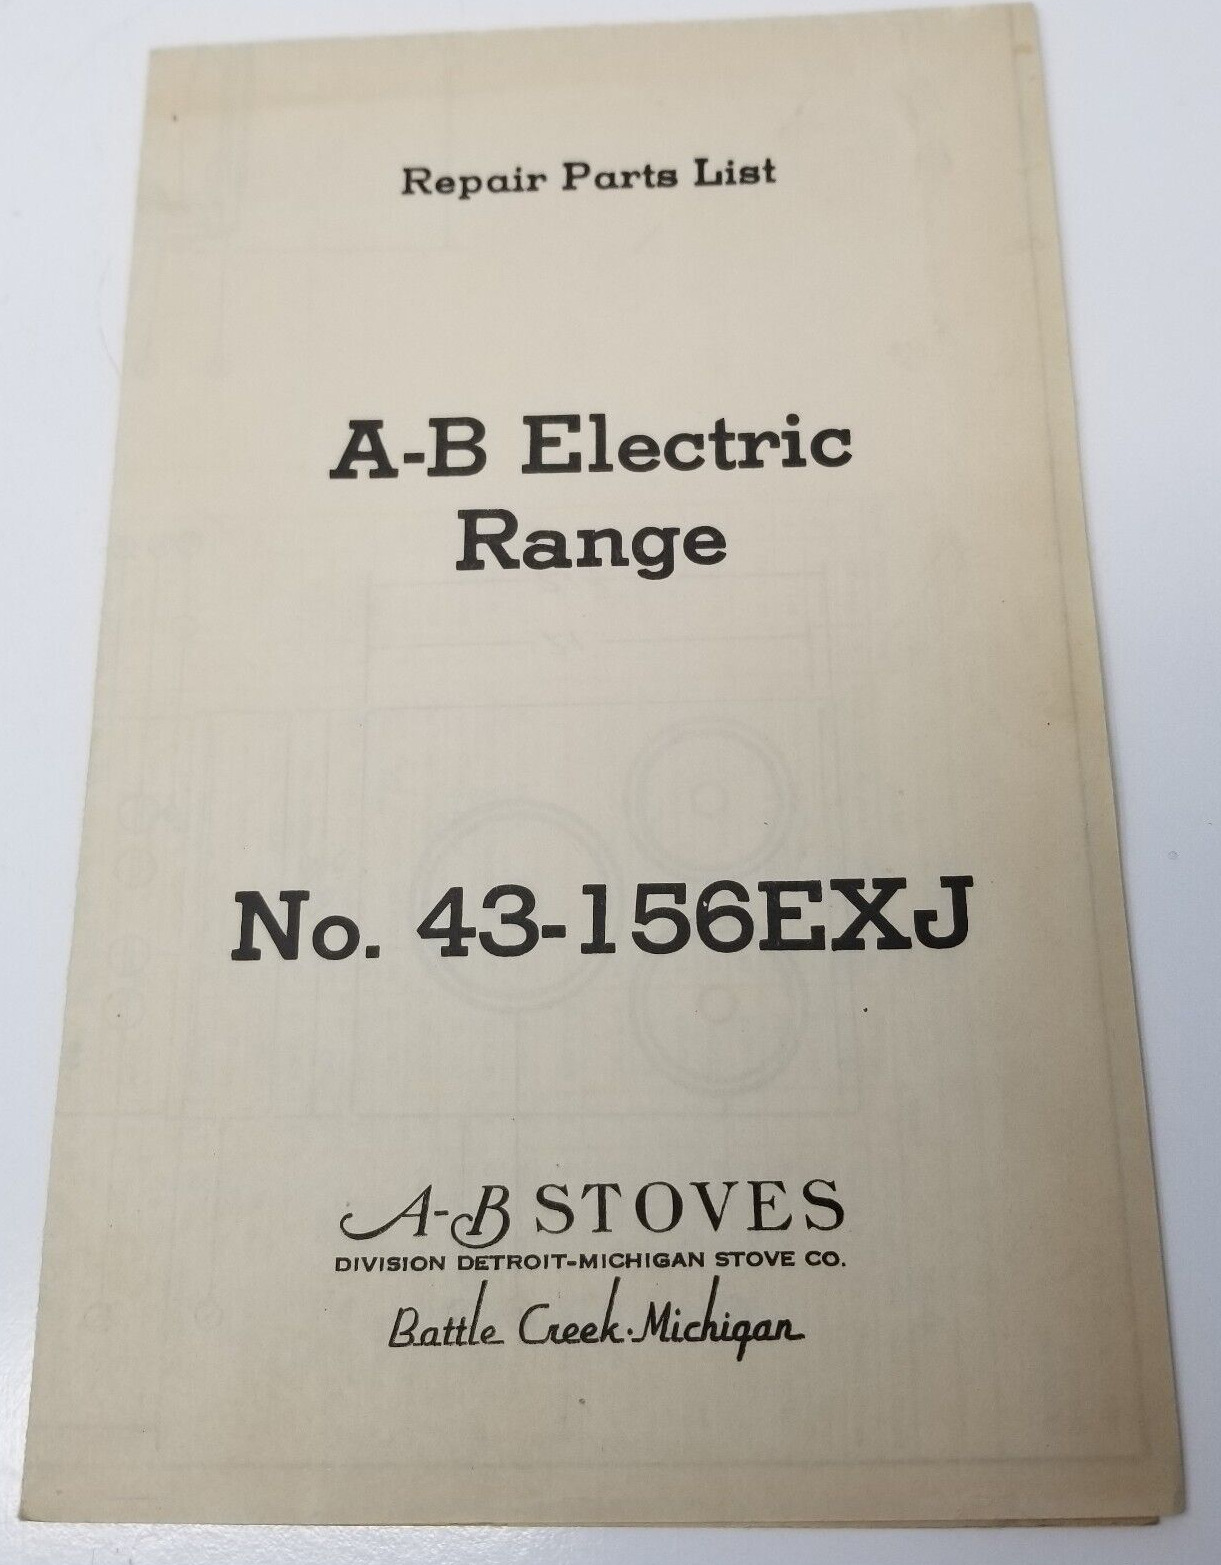 A-B Stoves 43-156EXJ Repair Parts List Schematic Diagram 1950 Detroit